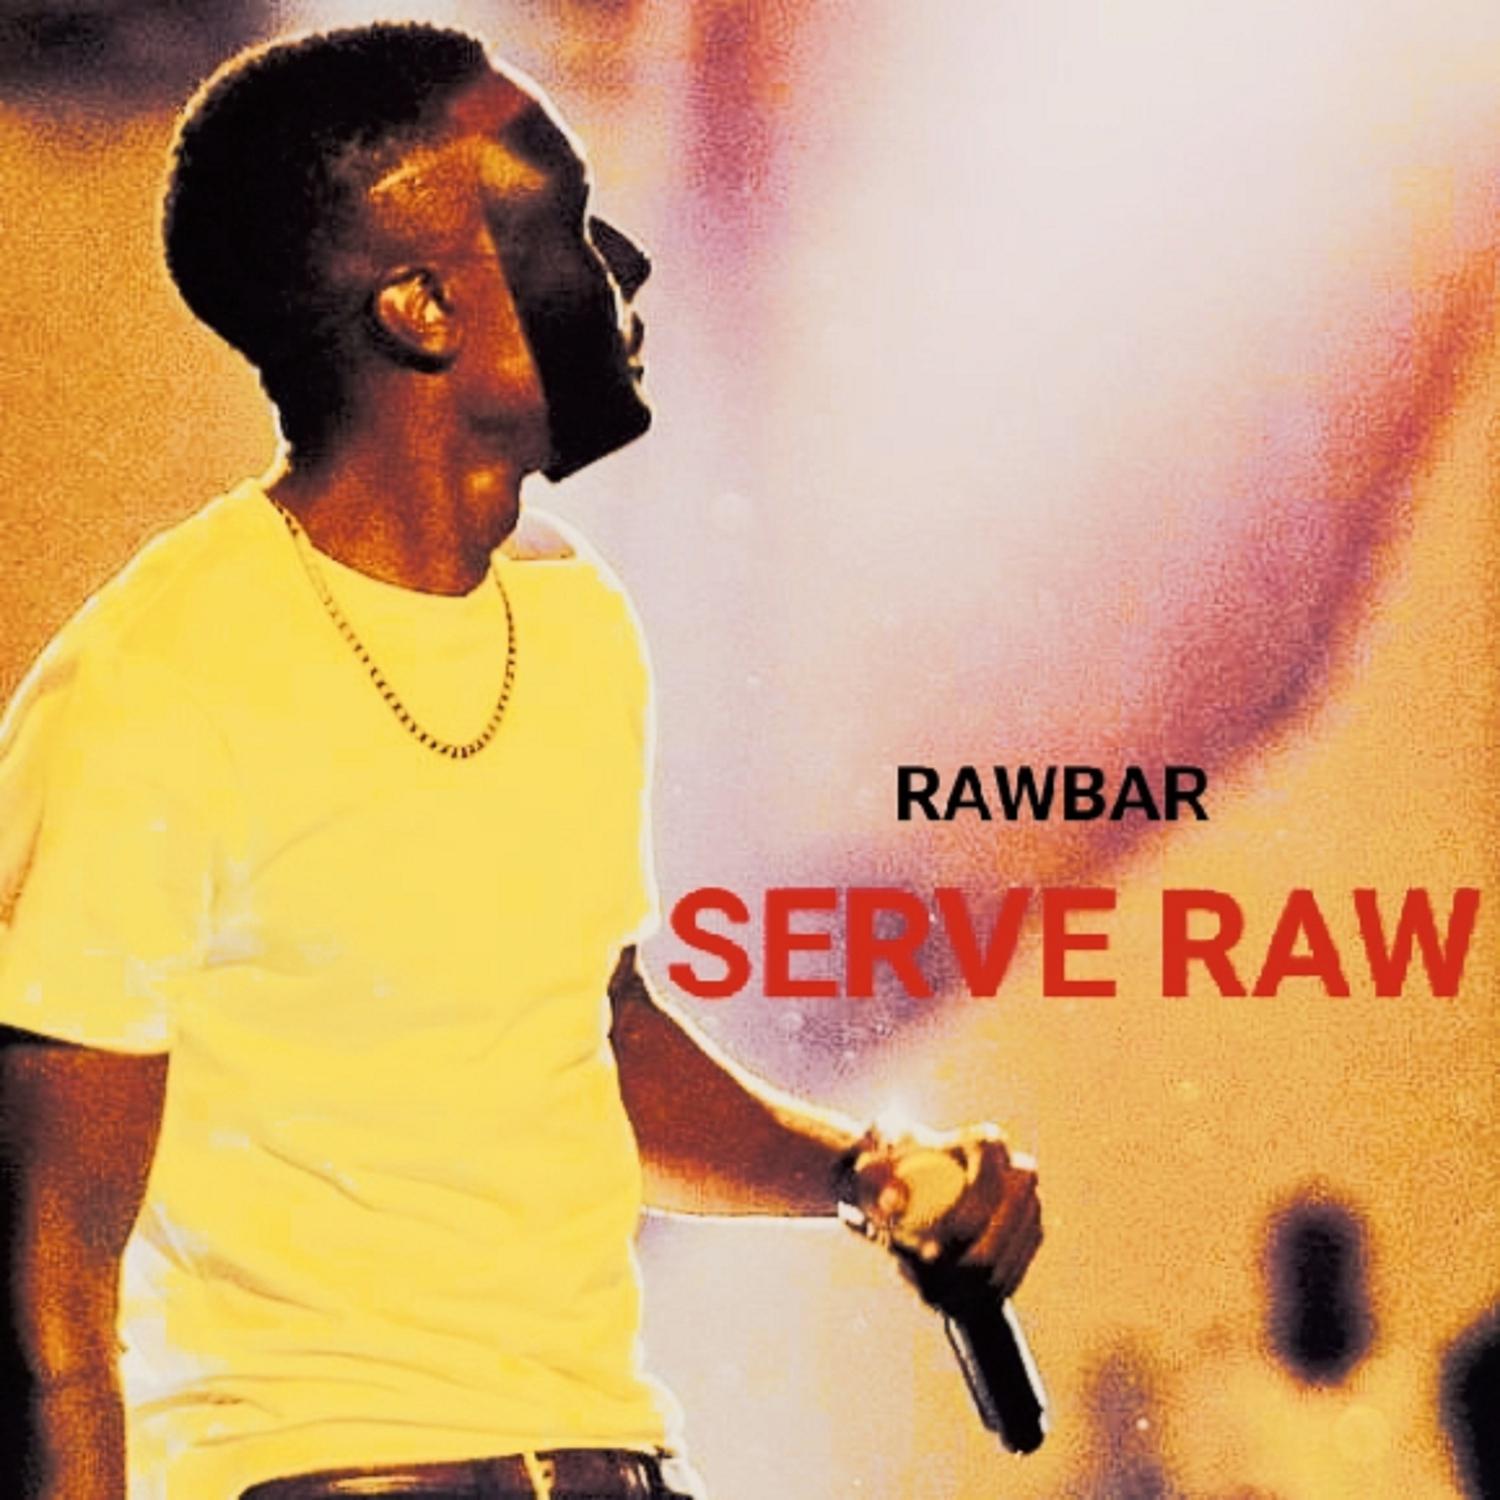 Rawbar - Who Am I?